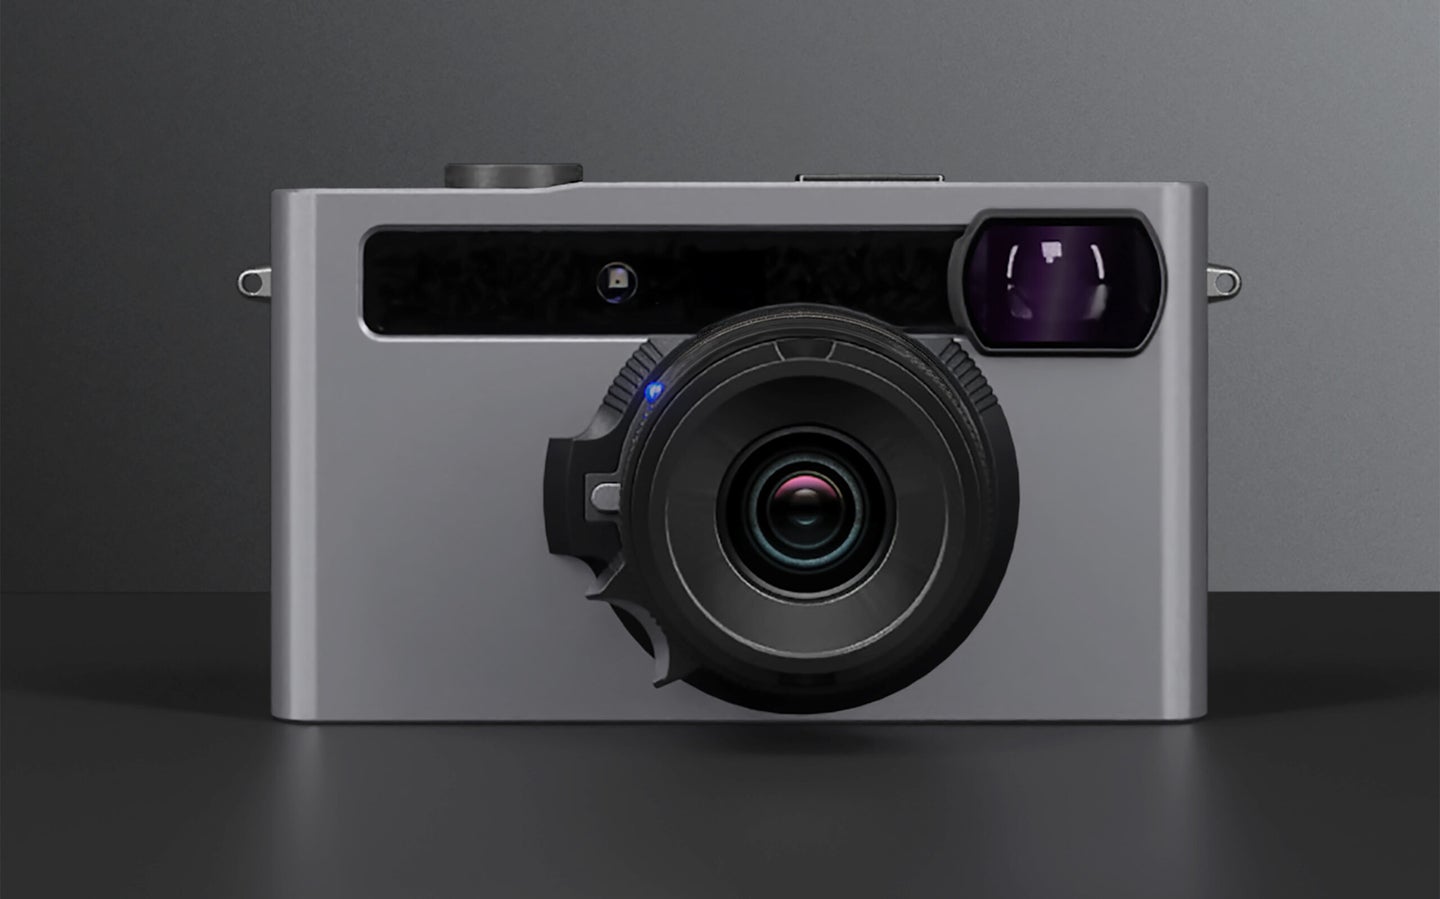 The new Pixii camera